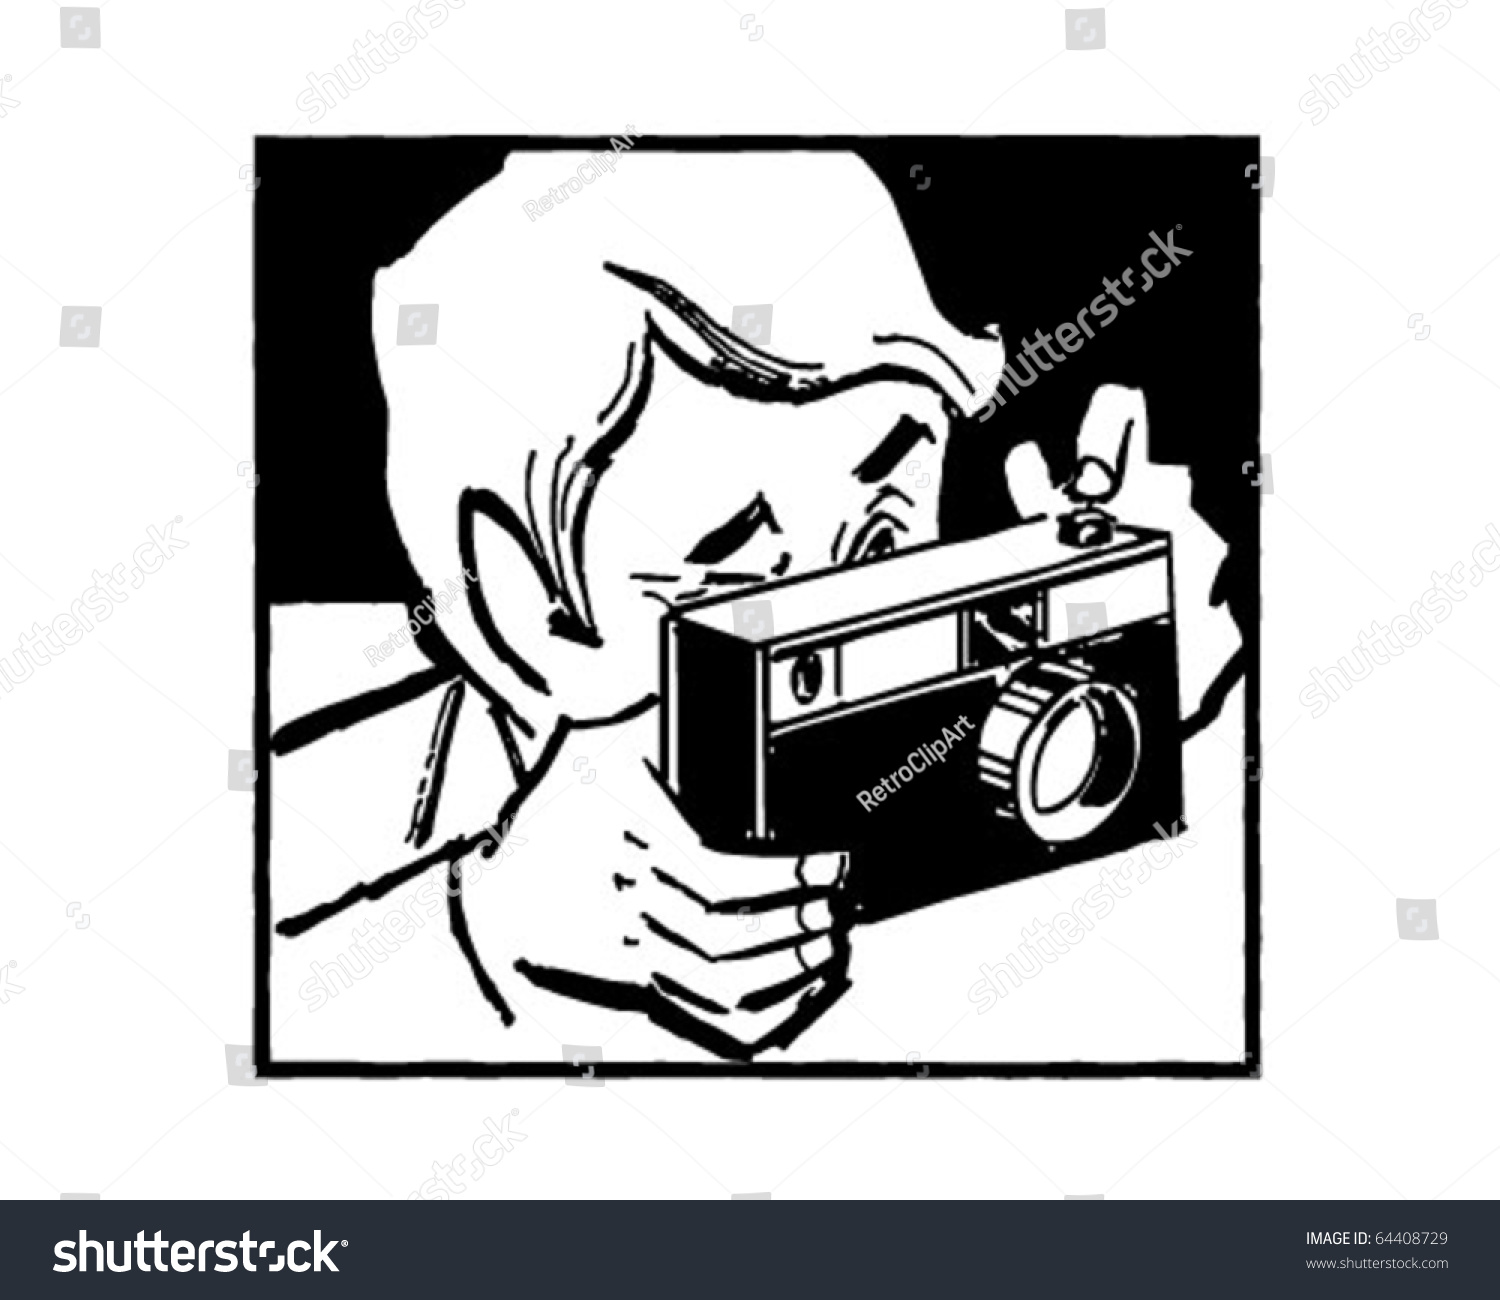 Taking A Picture - Retro Clipart Illustration - 64408729 : Shutterstock